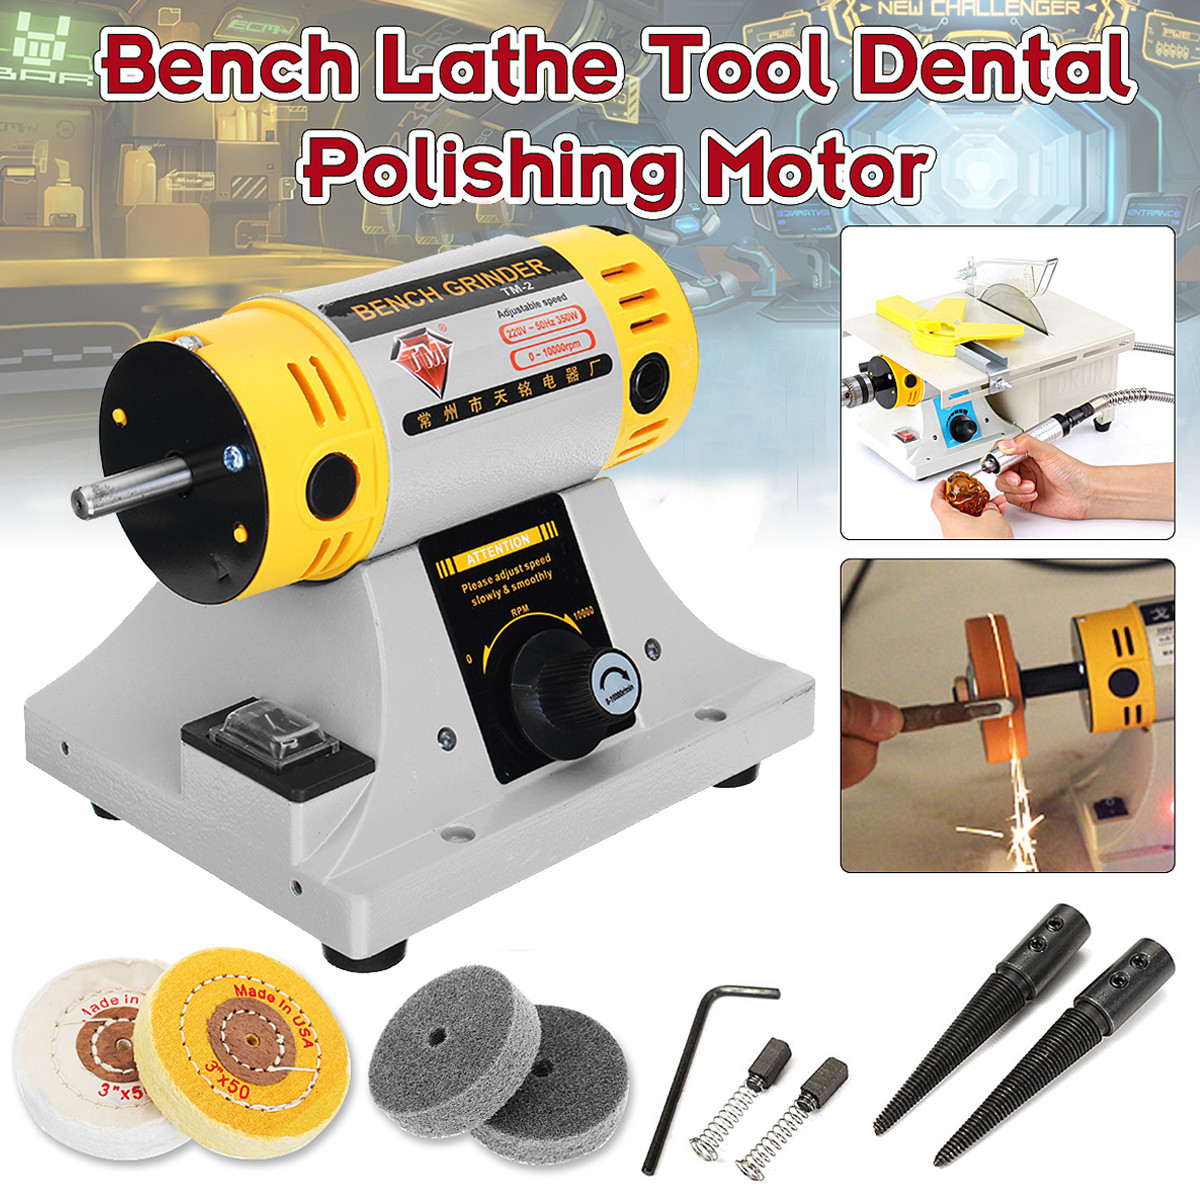 220V-Adjustable-Speed-Mini-Polishing-Machine-For-Dental-Jewelry-Motor-Lathe-Bench-Grinder-Kit-1185530-1